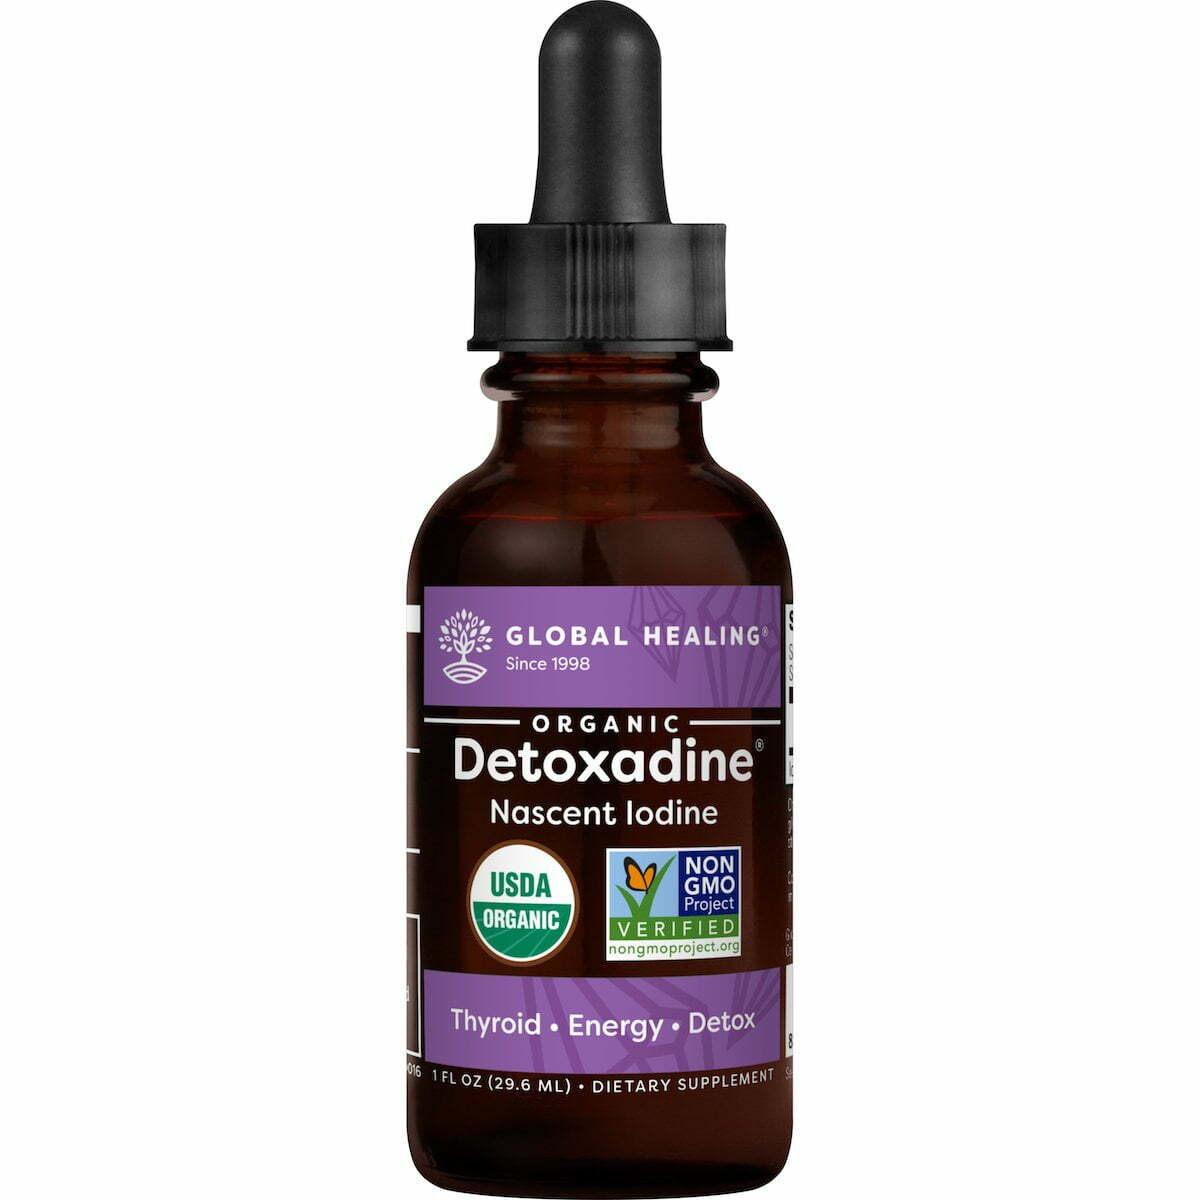 Global healing Detoxadine